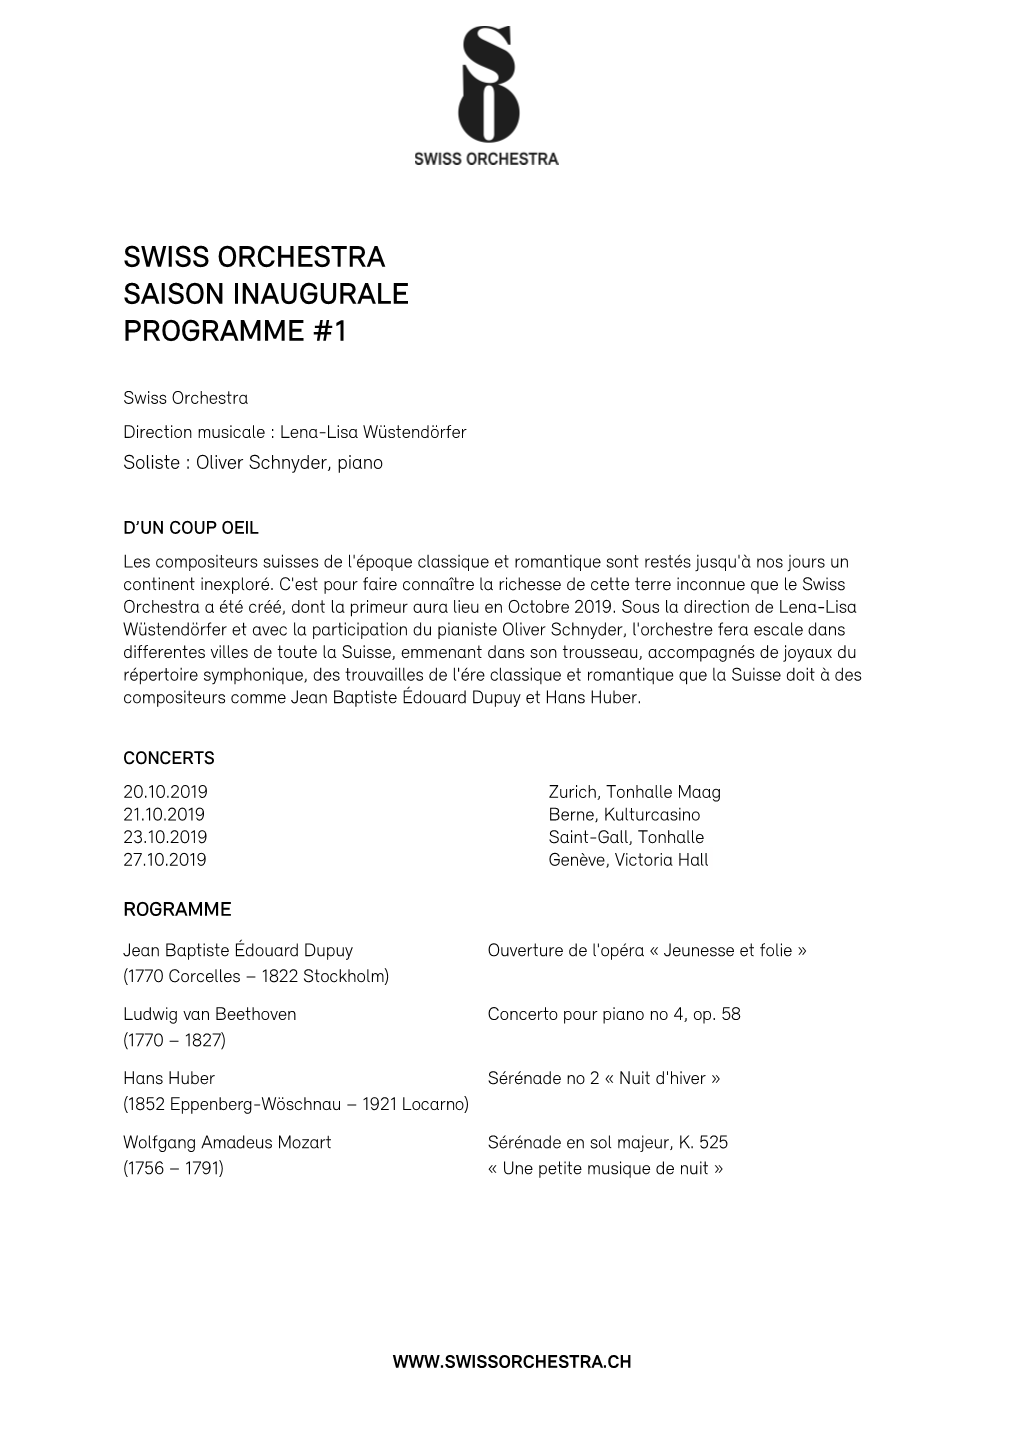 Swiss Orchestra Saison Inaugurale Programme #1